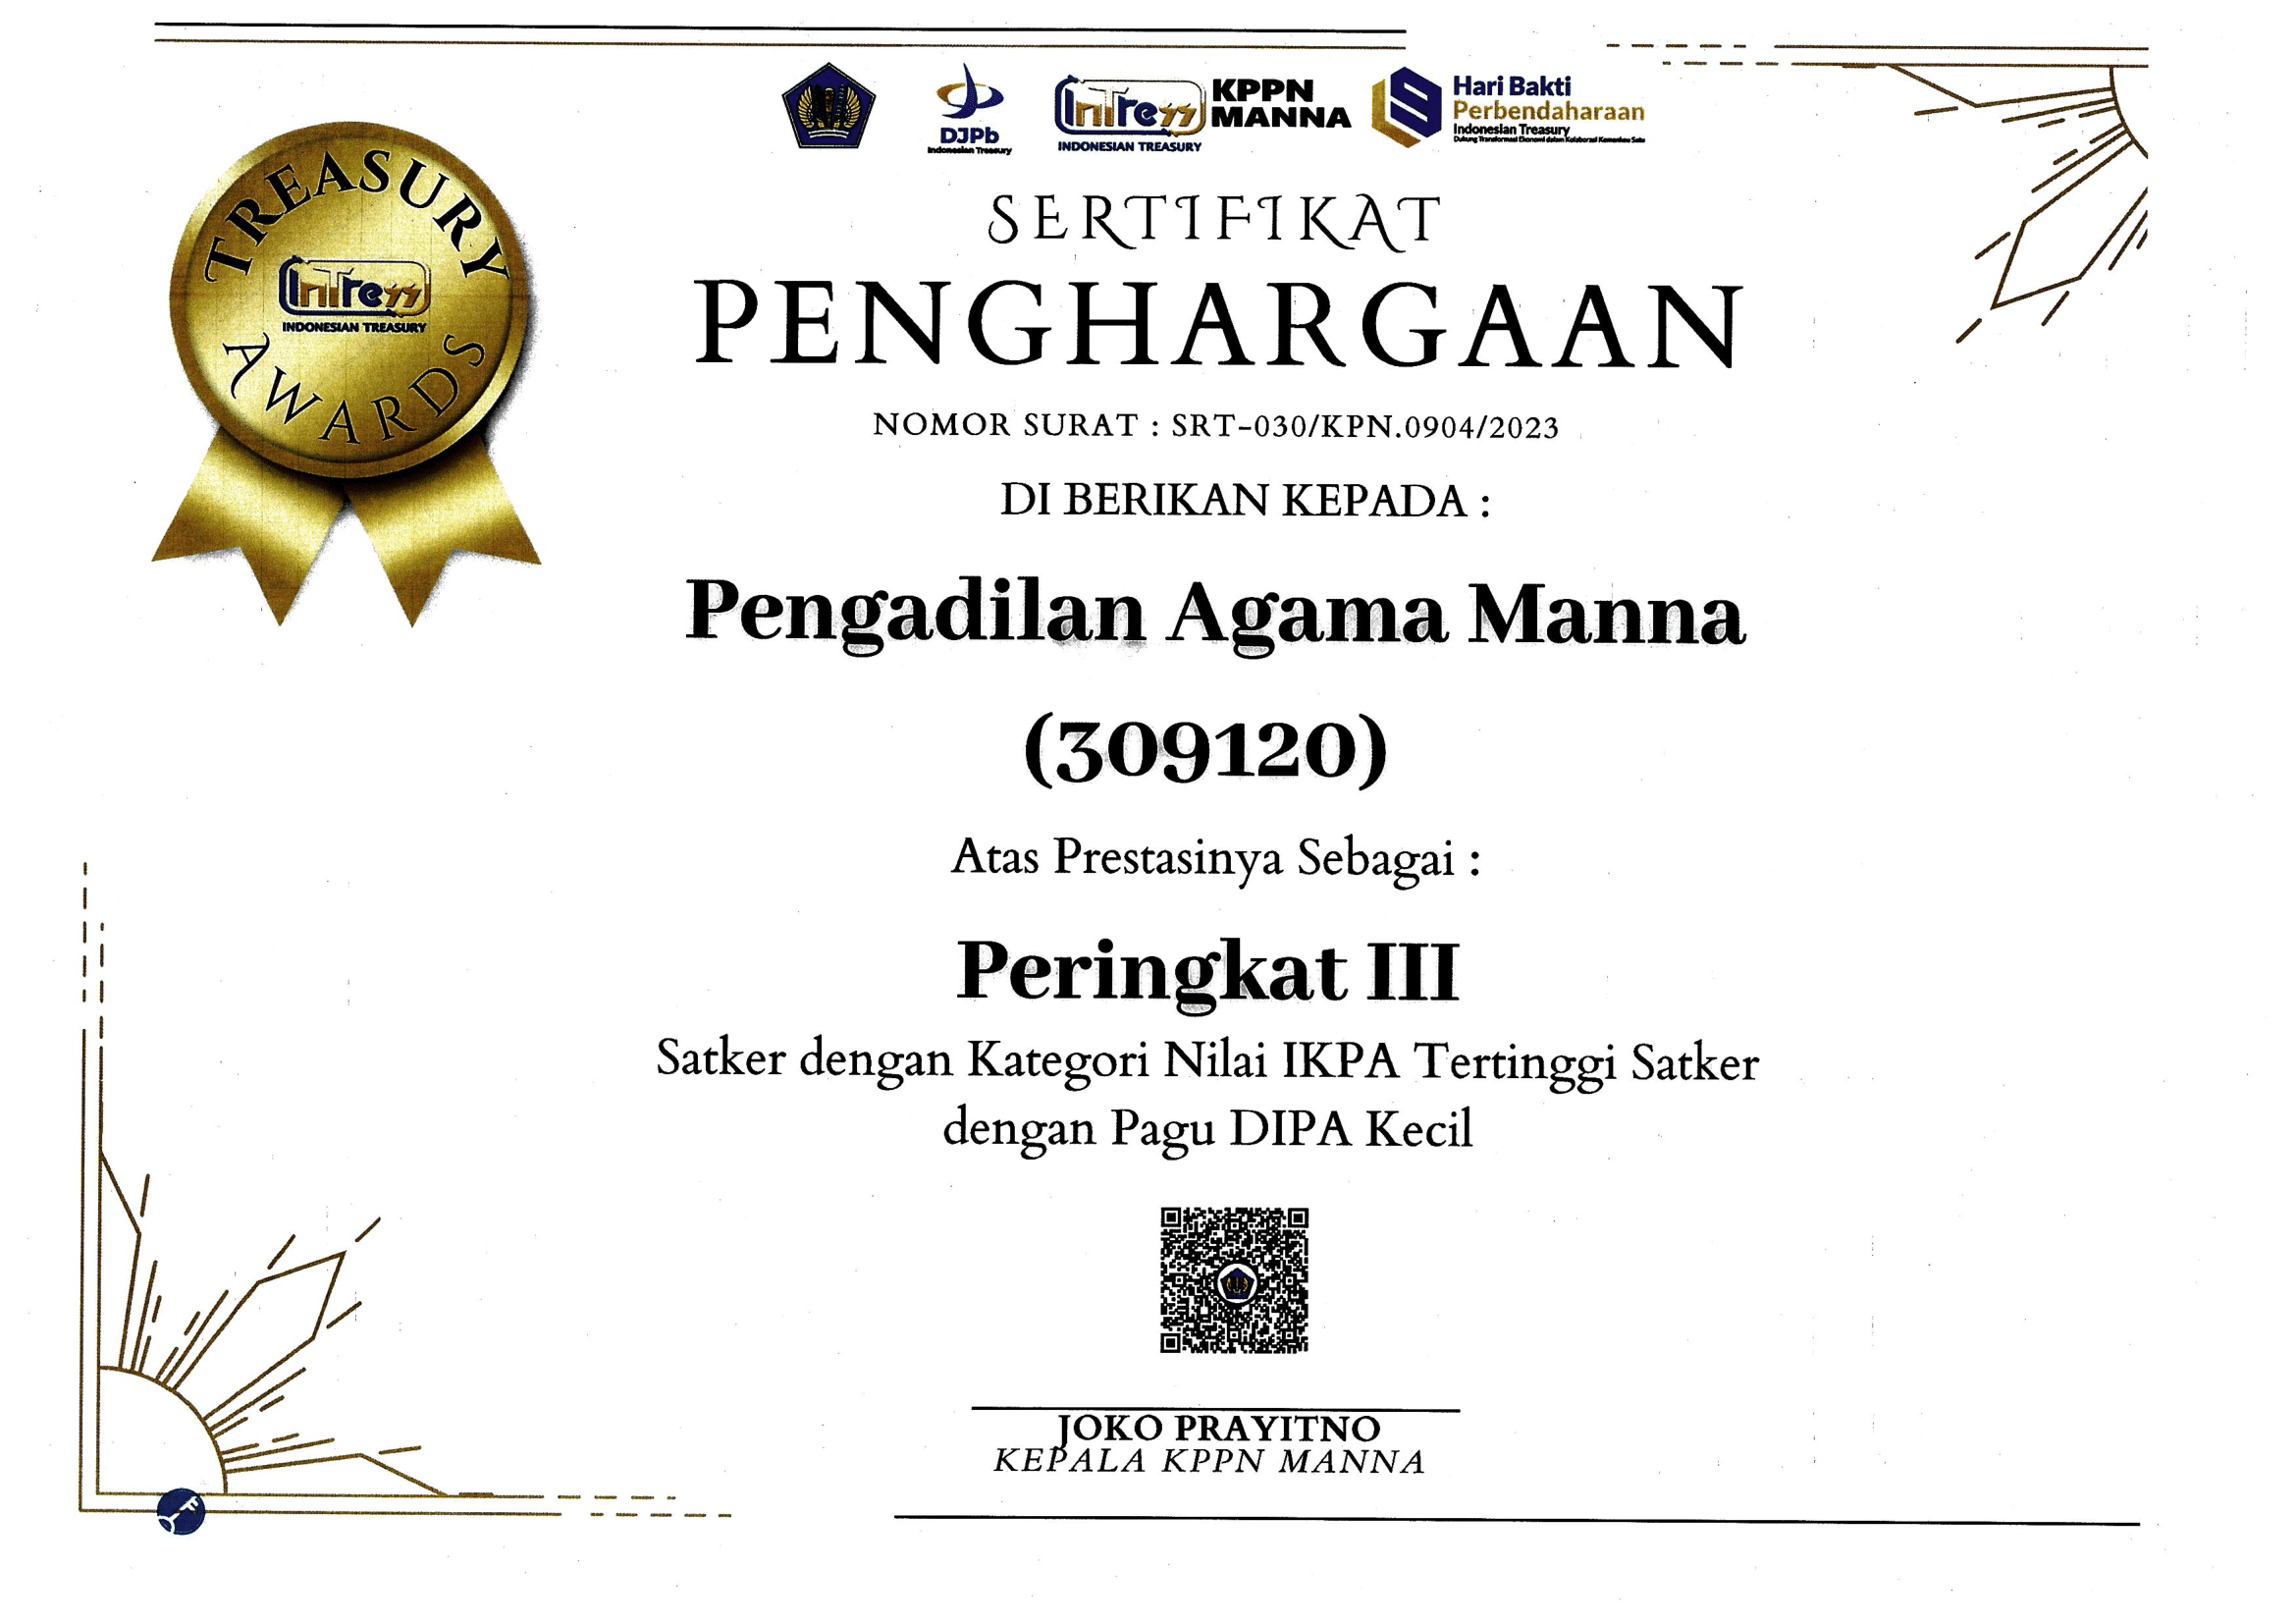 Penghargaan KPPN 2023 DIPA 04 1